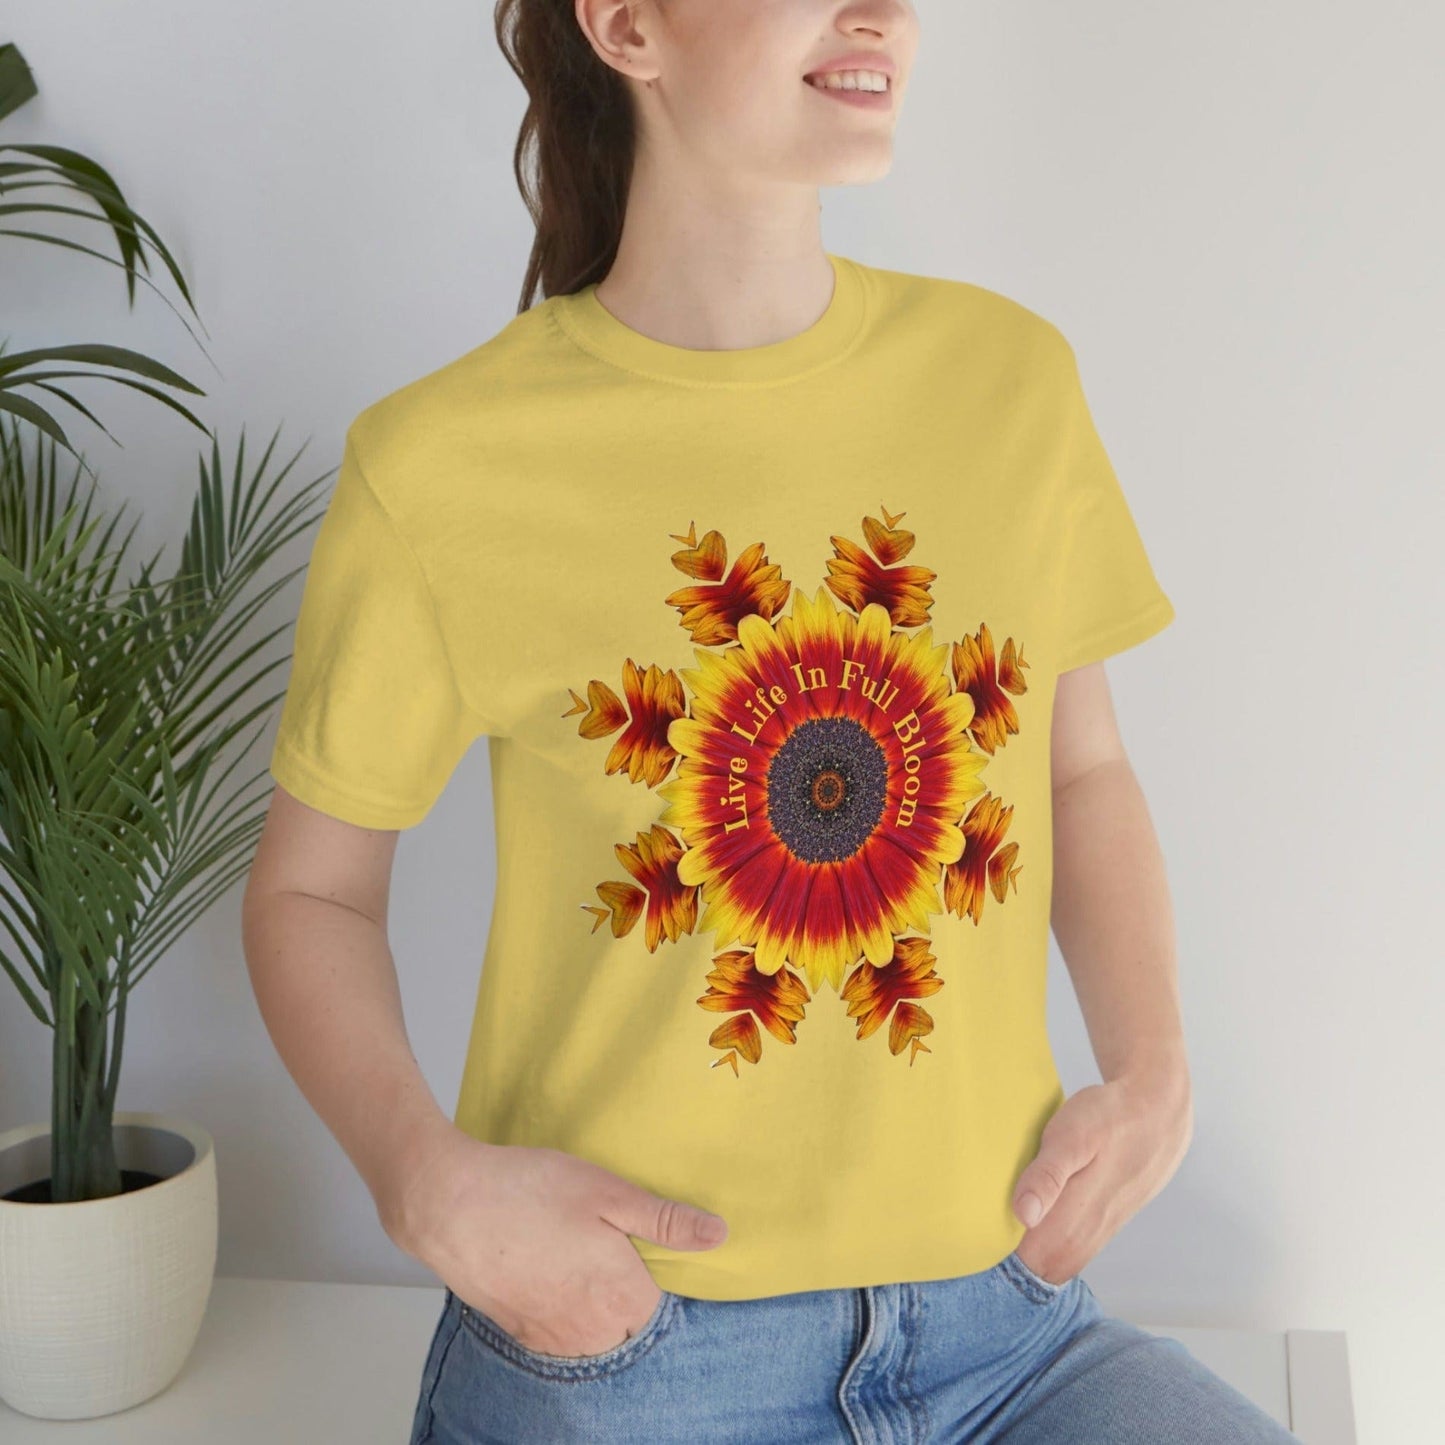 Sunflower TShirt, Zen Poet Shirt, Fun Shirt Designs, Cute Shirts Live Life In Full Bloom